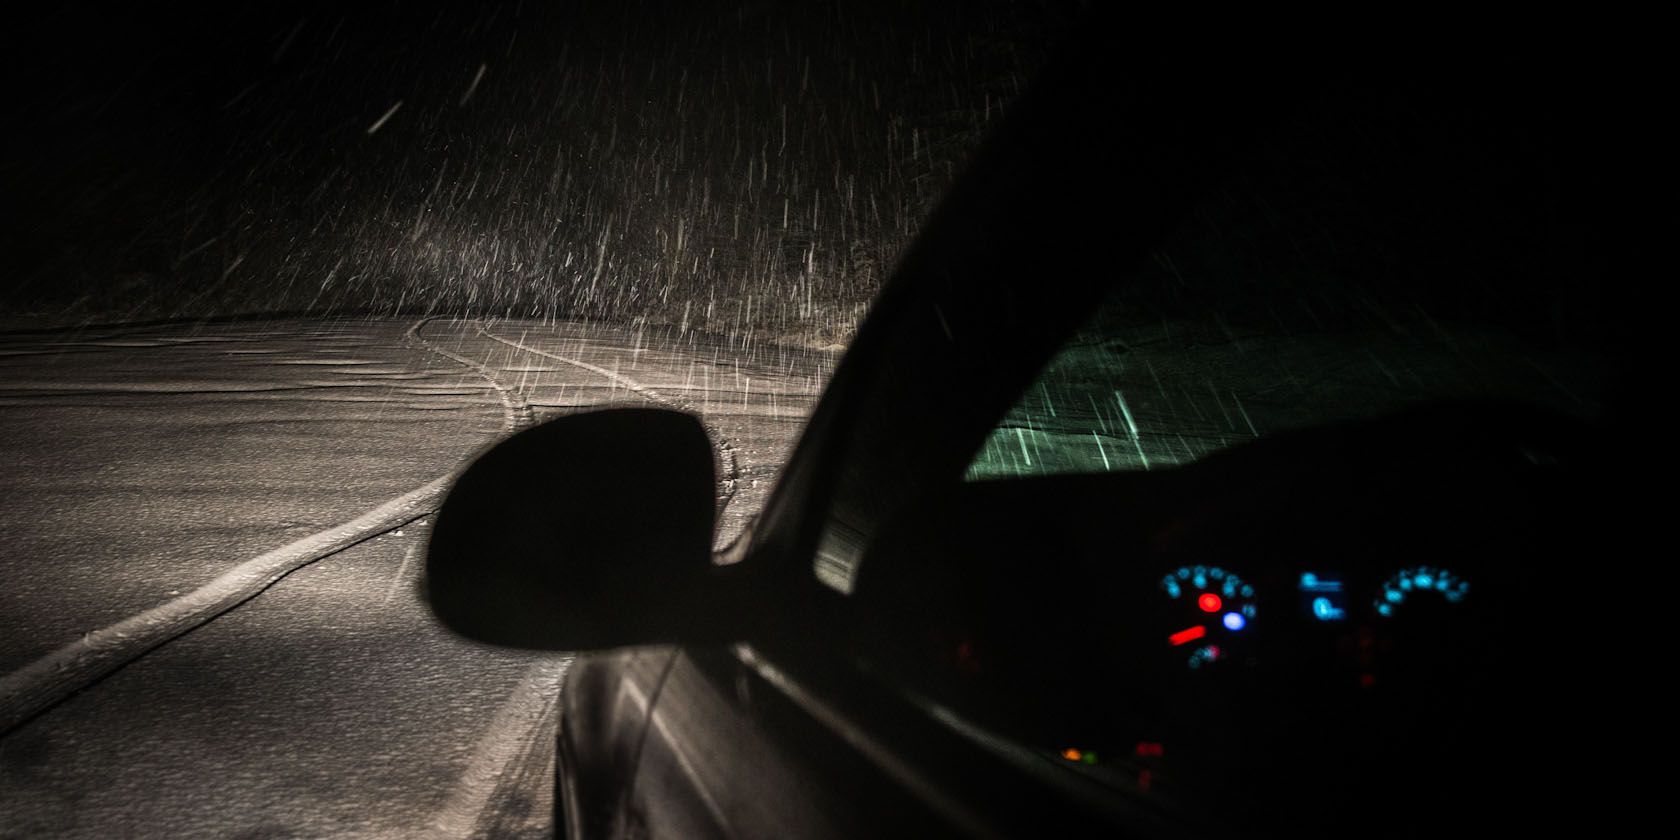 Car at night under rain.